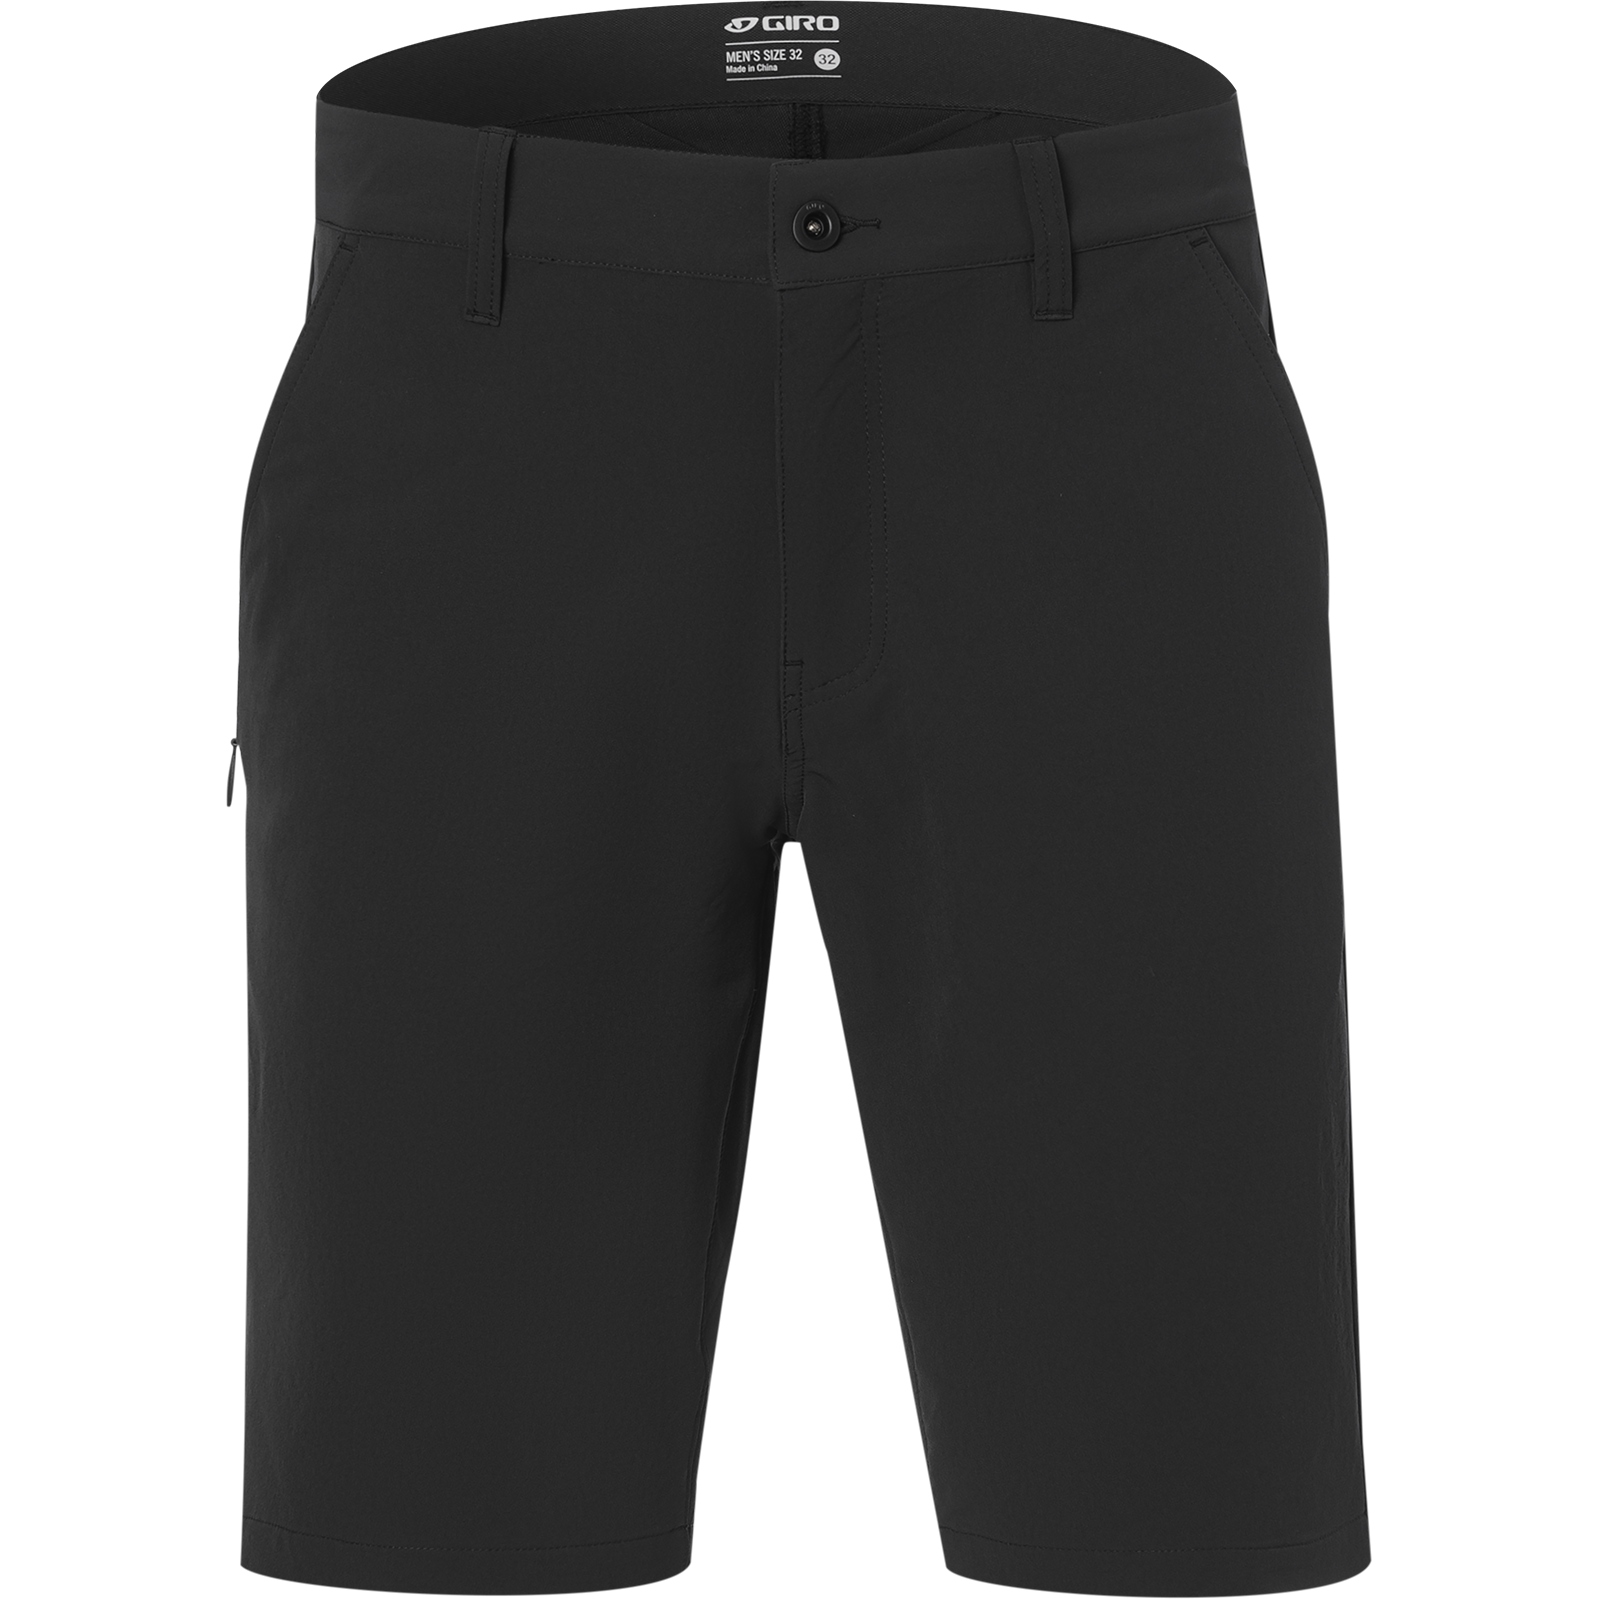 Produktbild von Giro Venture II Shorts Herren - schwarz